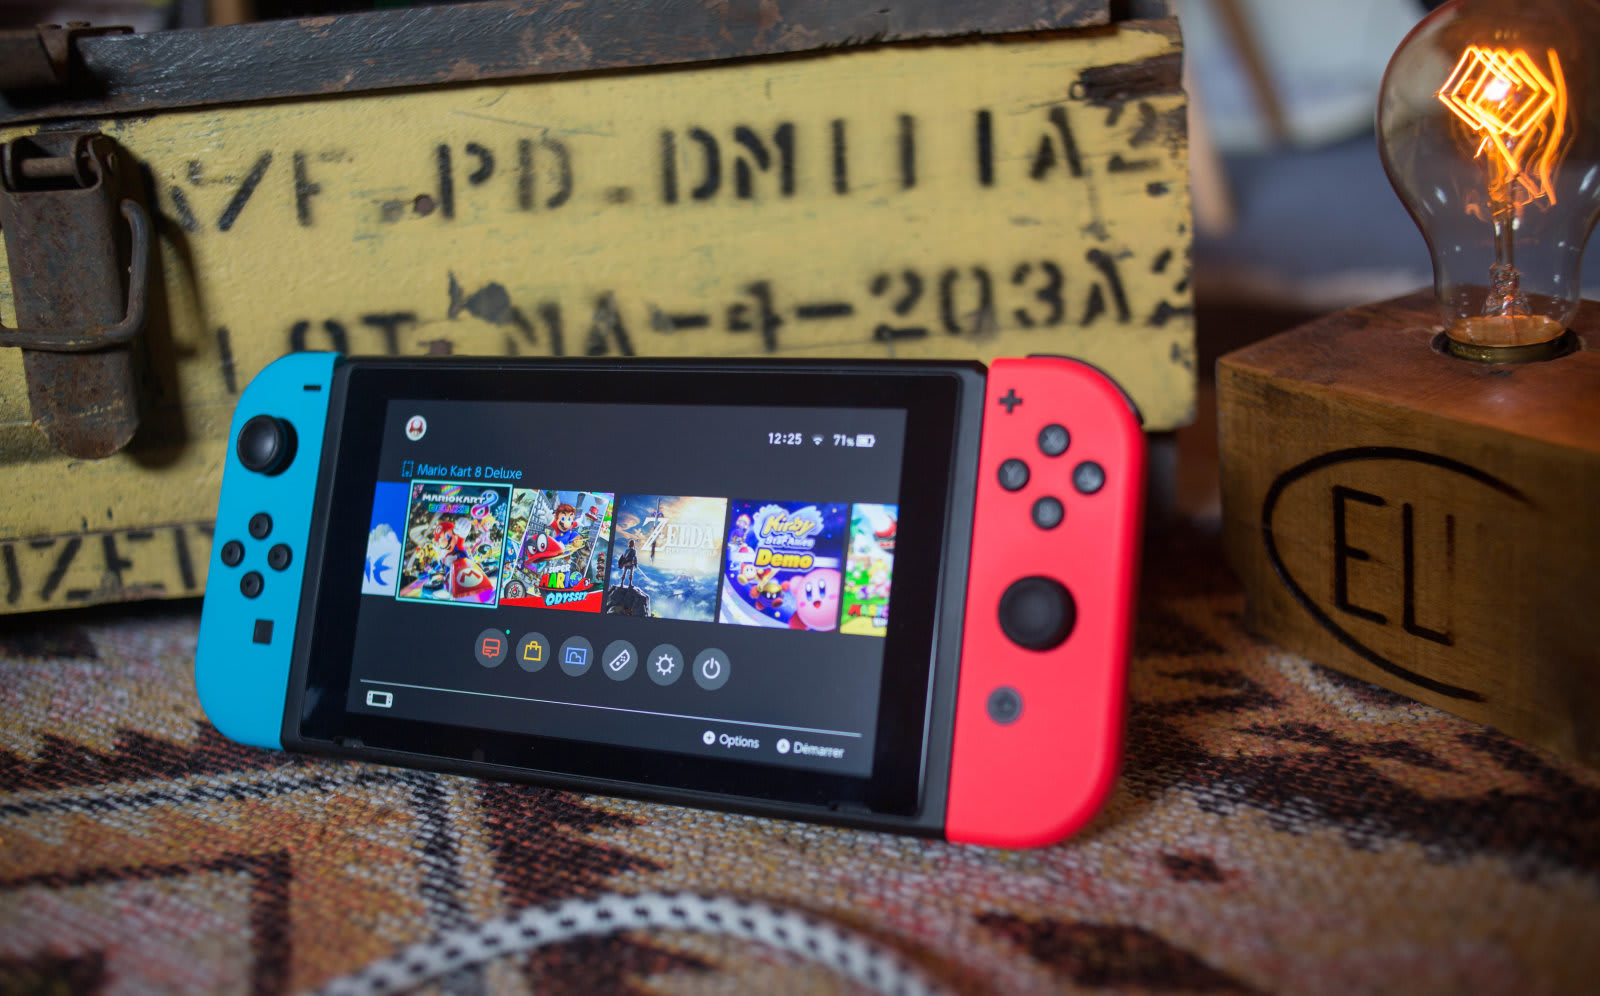 Nintendo Switchの ドリフト 問題 米任天堂が無償修理を指示したとのうわさ Engadget 日本版